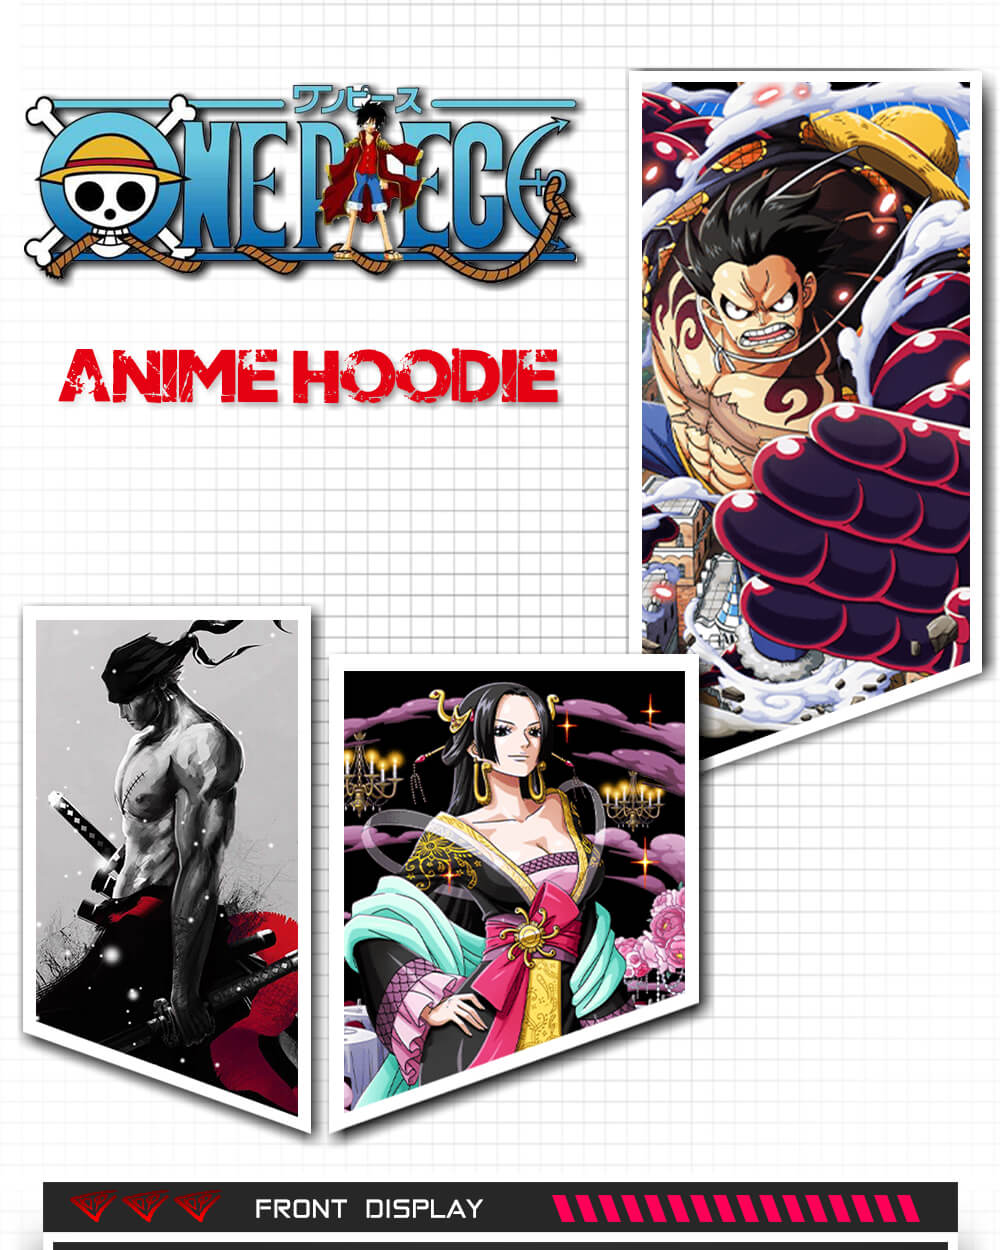 hoodie,anime,Tokyo,Japan,manga,one piece,pirate, Monkey D. Luffy,devil fruits